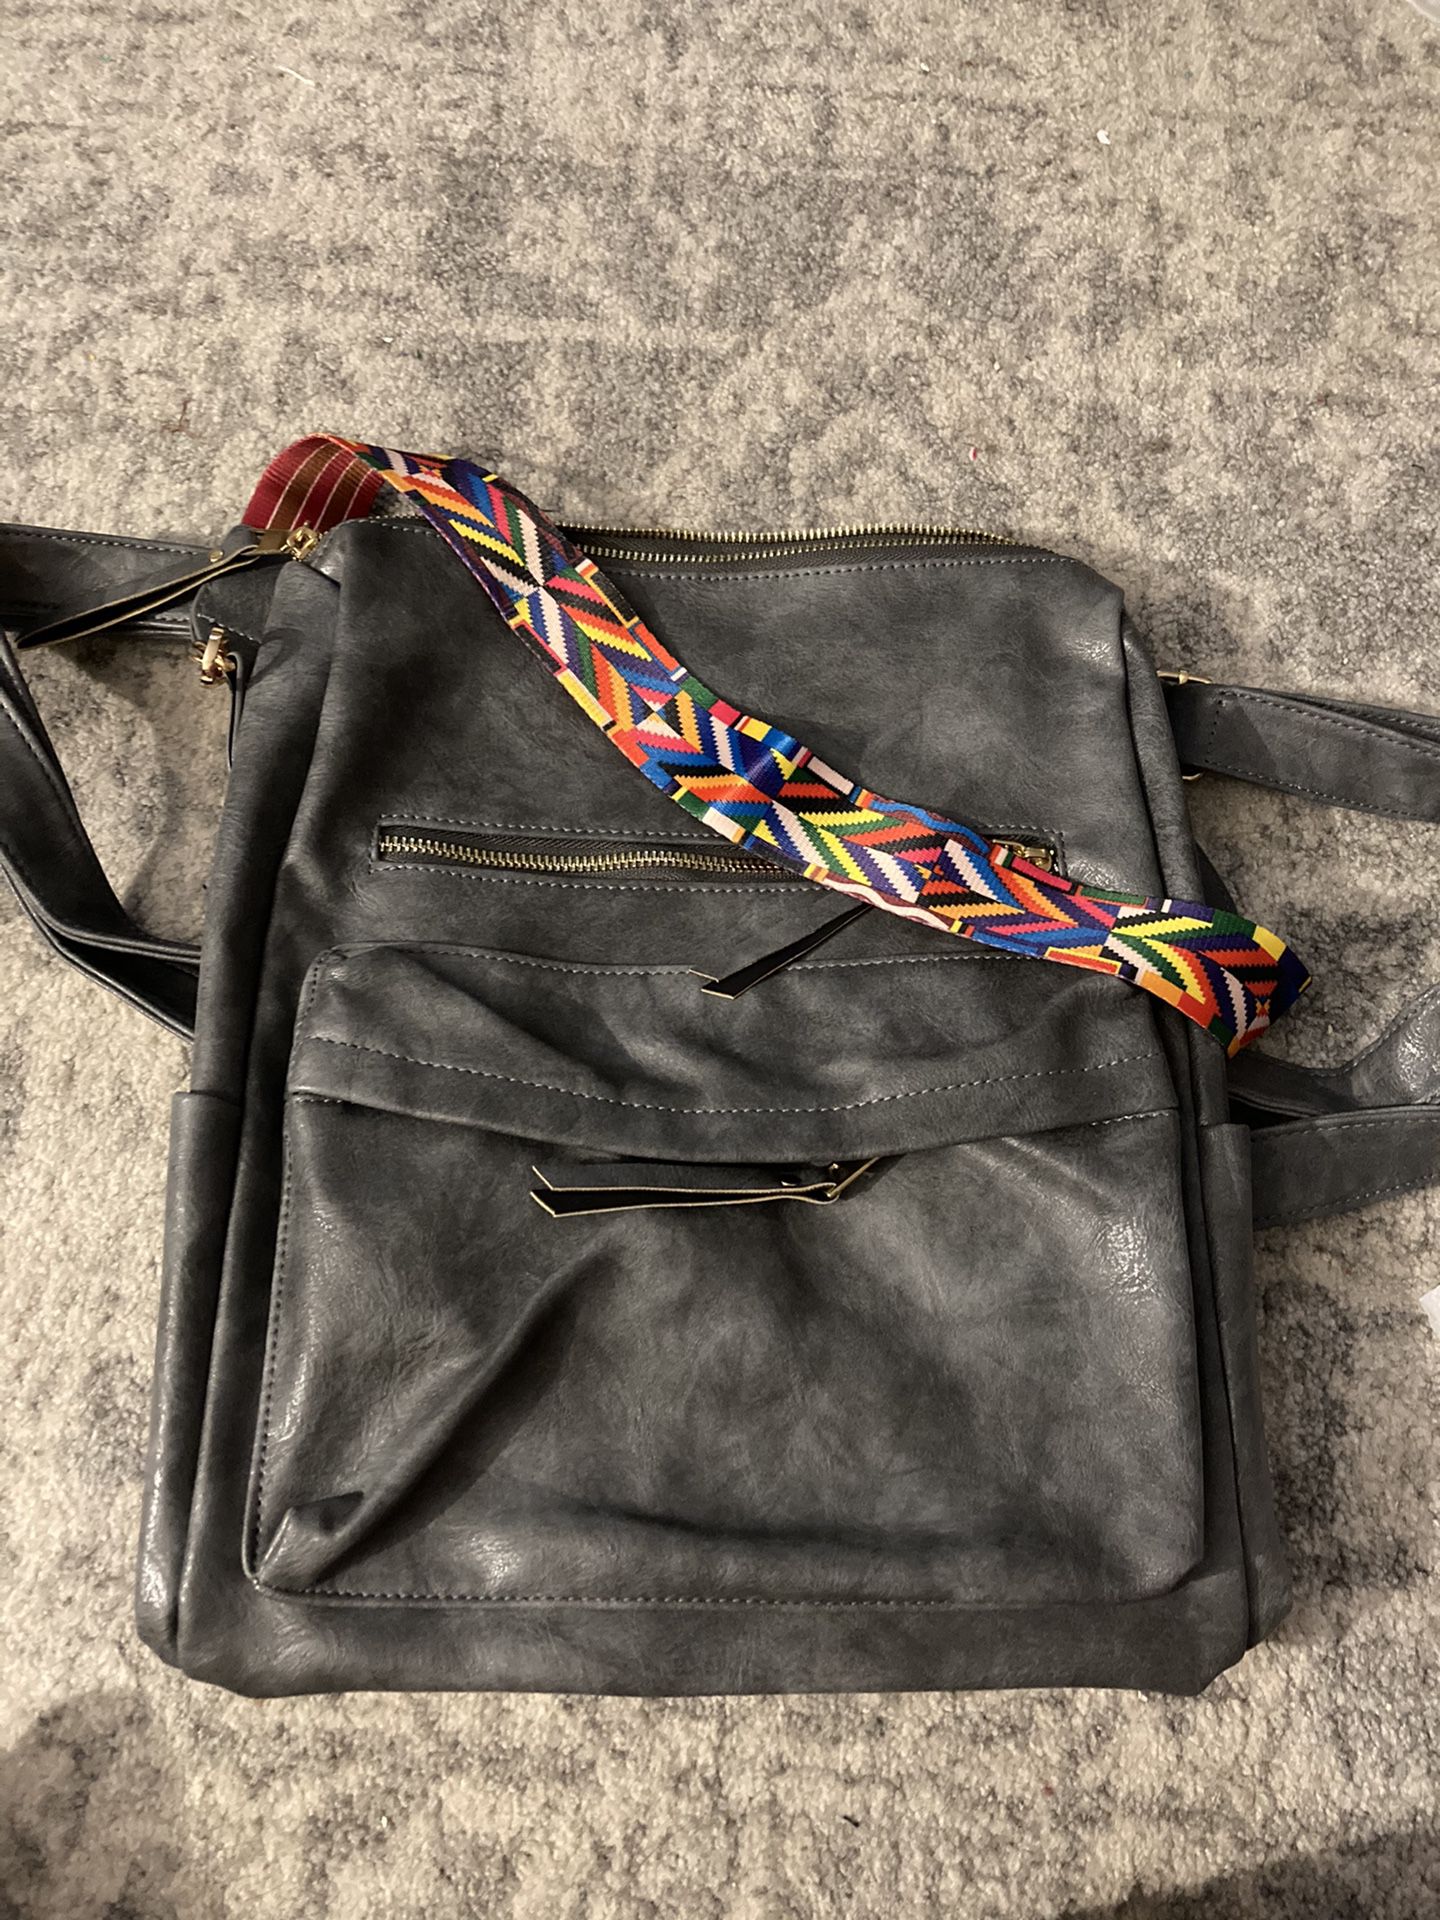 Beautiful brand new women’s backpack/convertible bag/purse